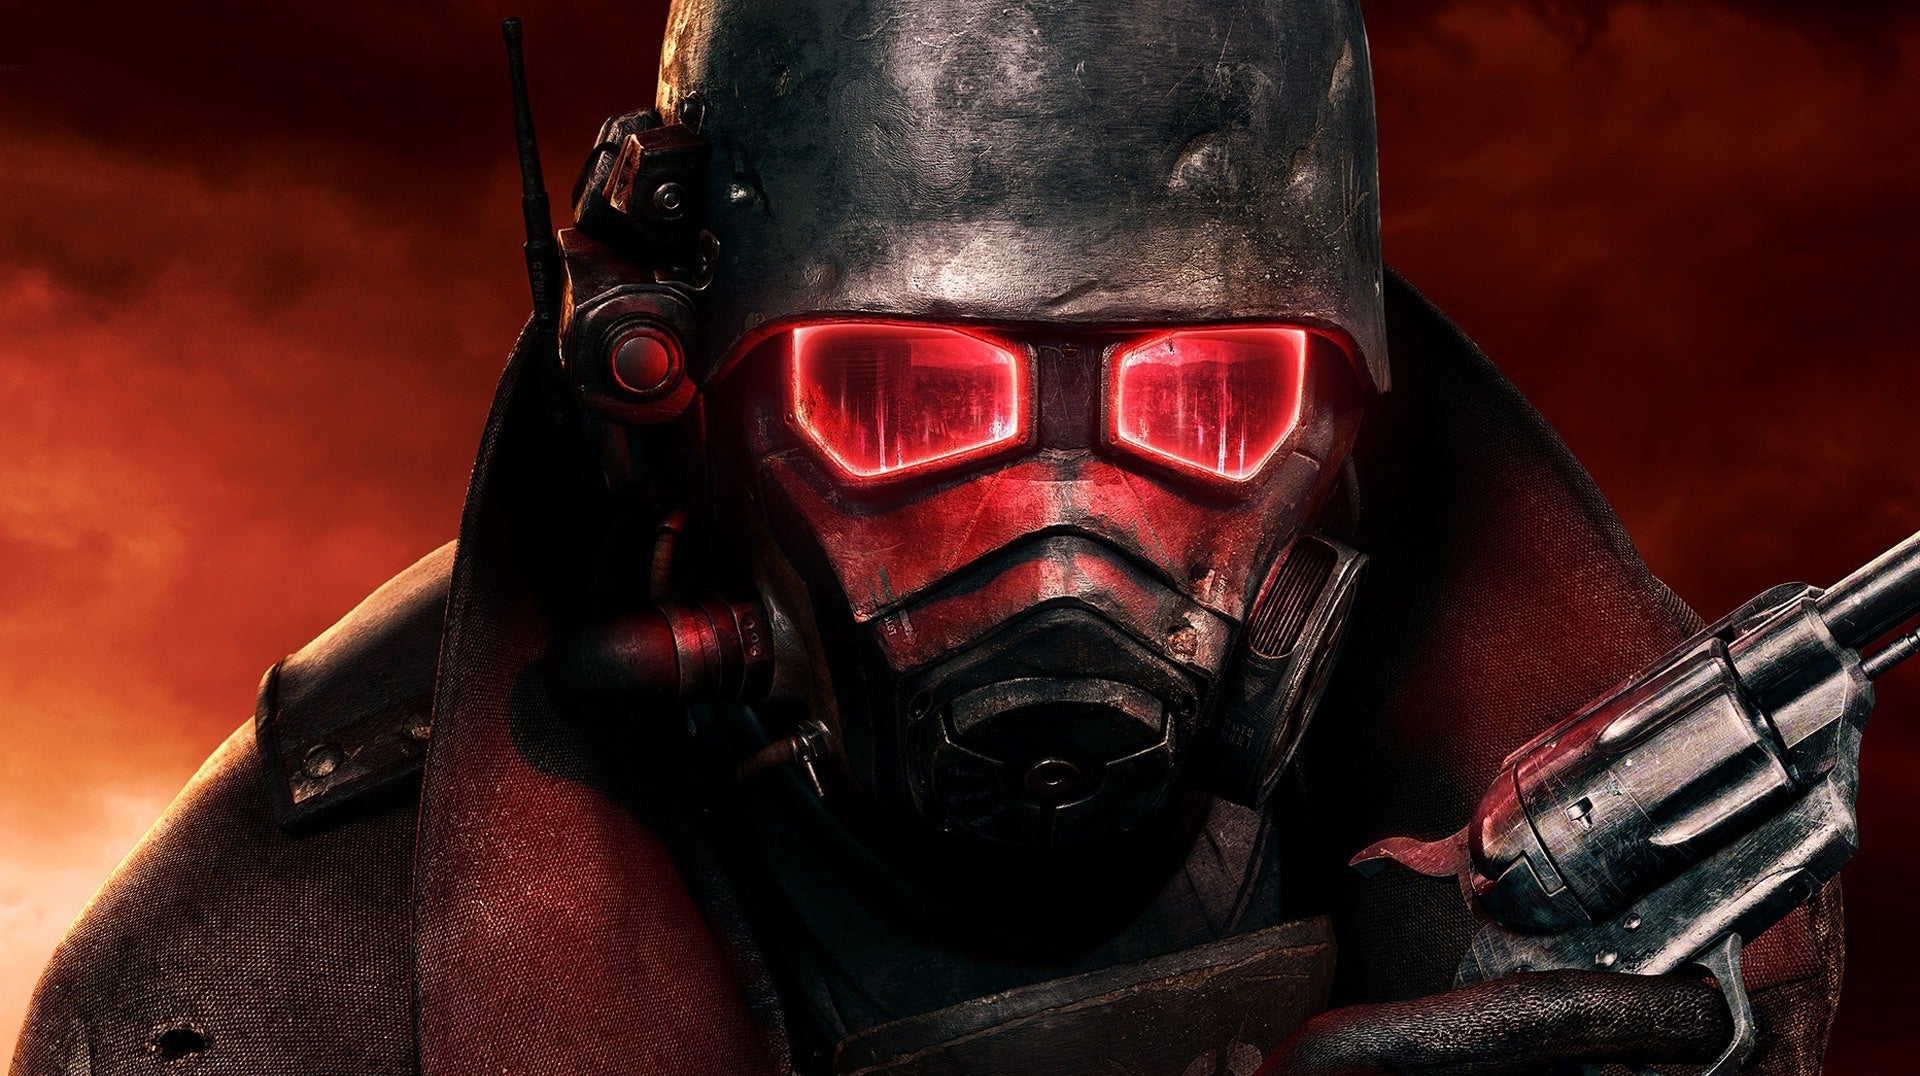 Immagine di Fallout: New Vegas permette di simulare l'esperienza online di Fallout 76 grazie ad una mod